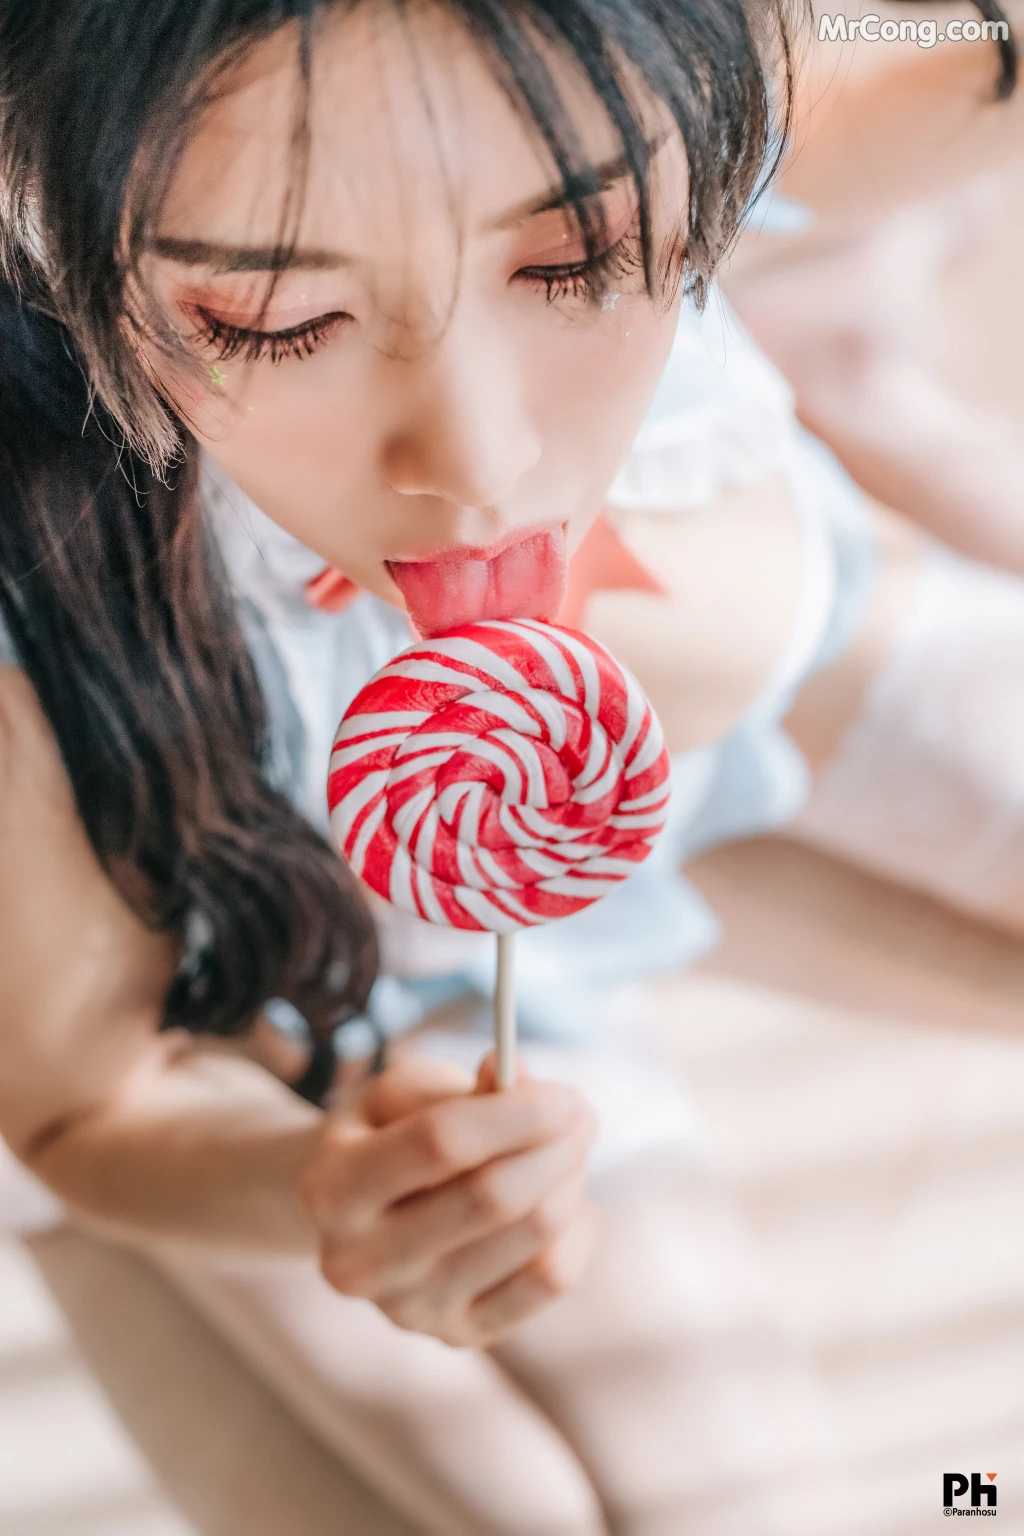 [Paranhosu] Sia_S22: Photo Book Vol.6 - Lollipop (47 photos) photo 2-15